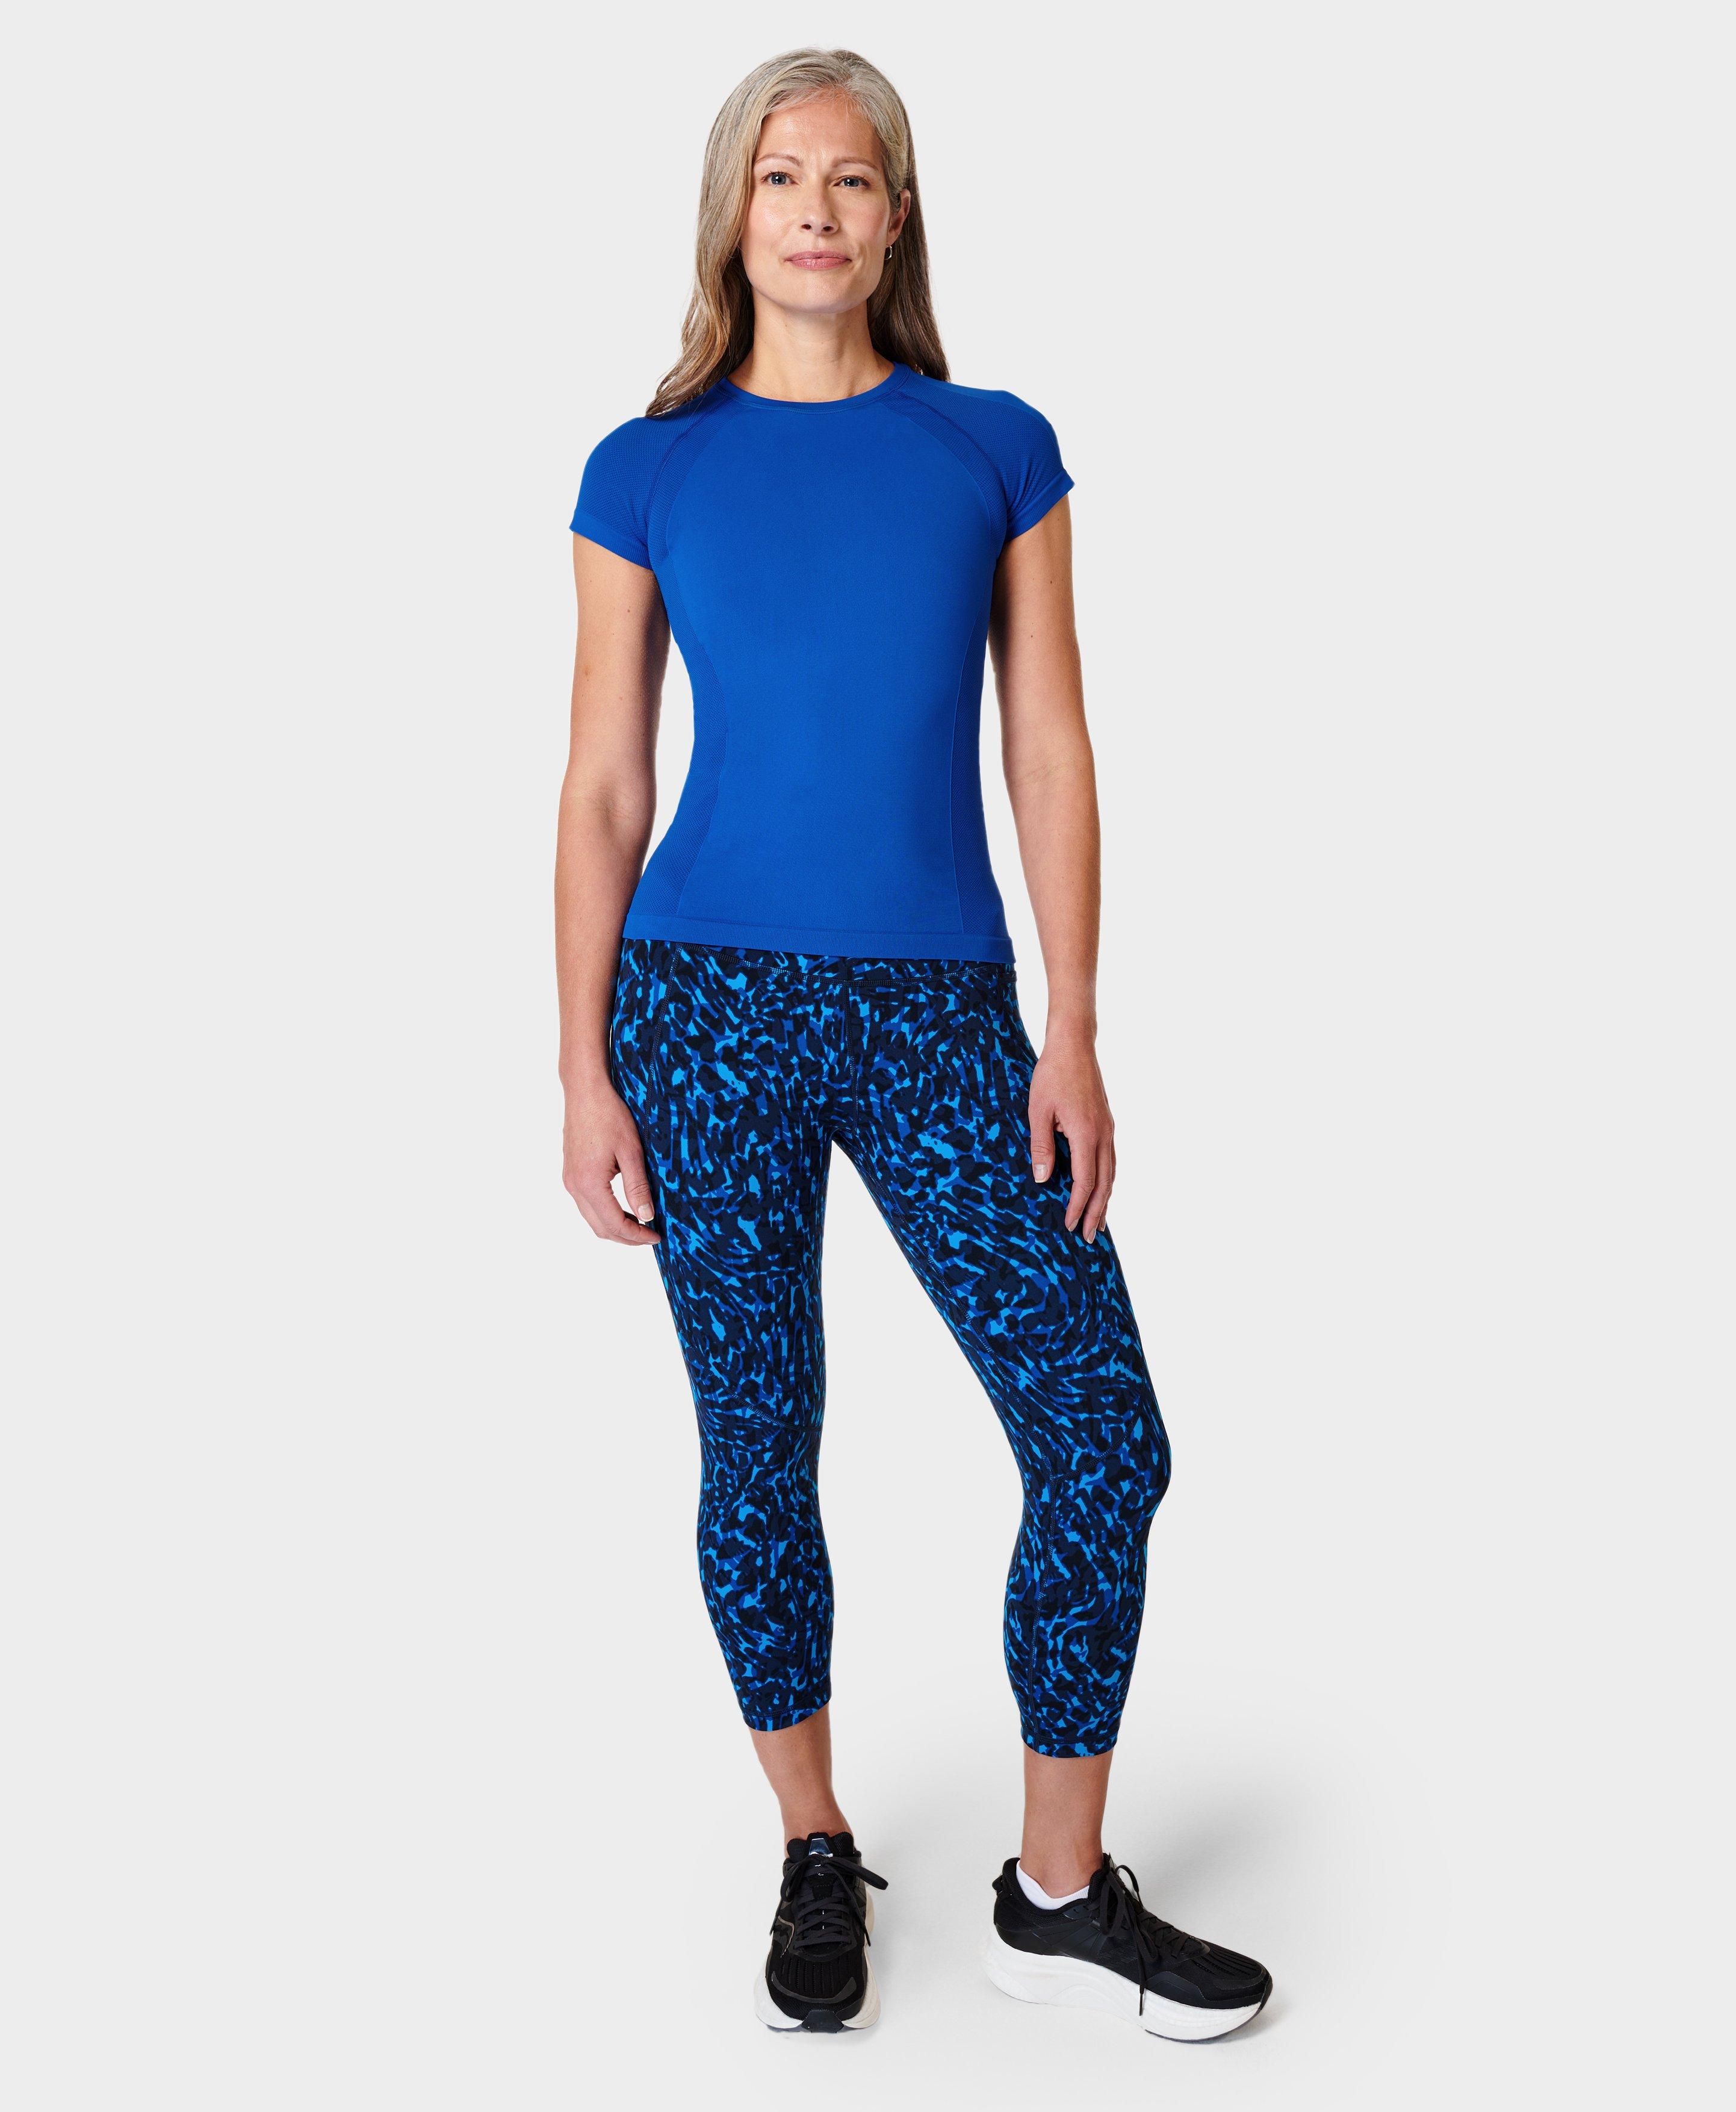 Power Cropped Workout Leggings - Blue Animal Swirl Print, Women's Leggings